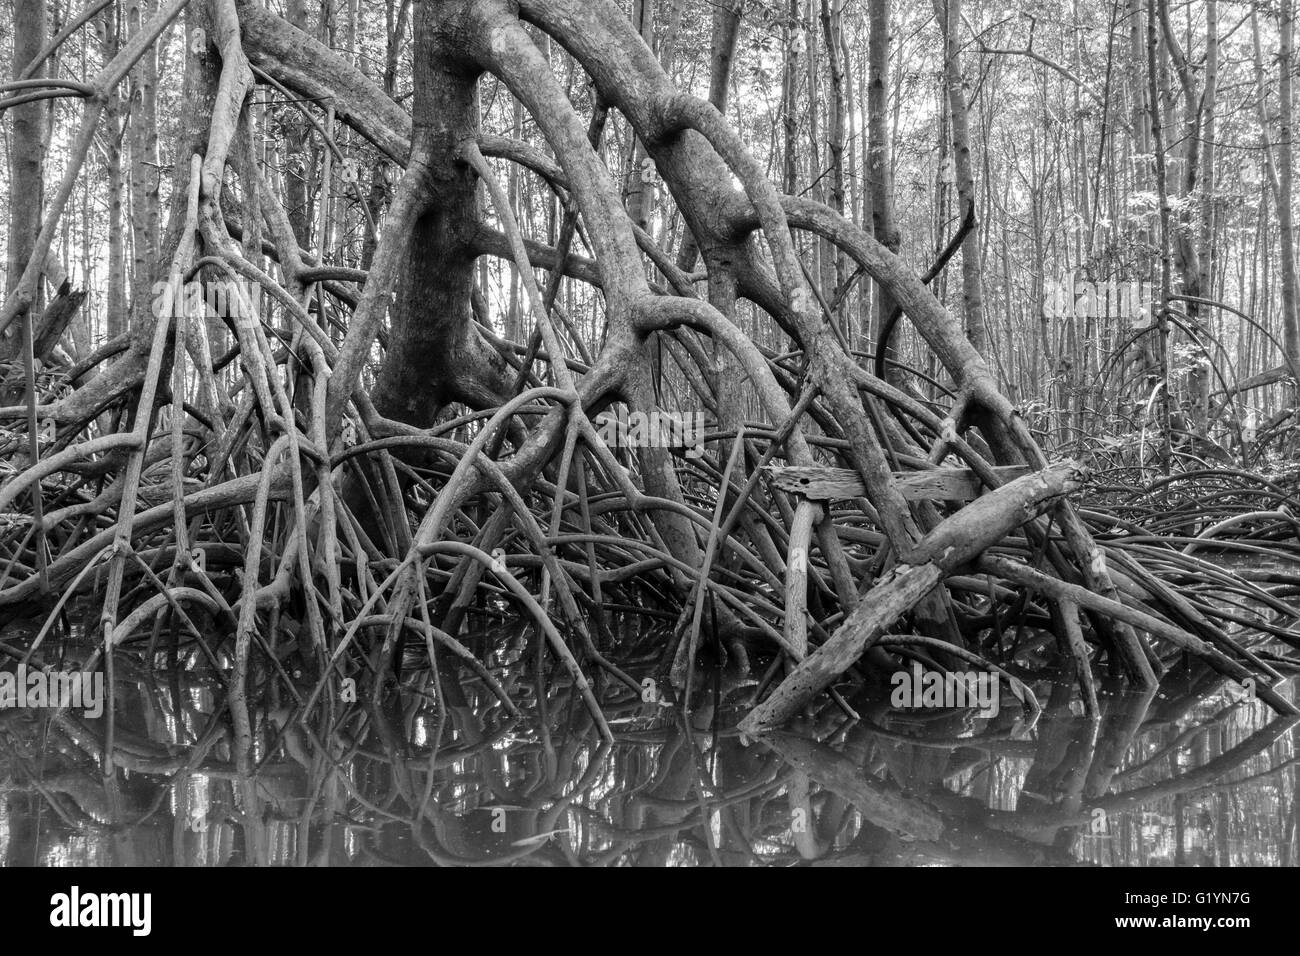 OSA PENINSULA, COSTA RICA - Mangrove swamp. Stock Photo